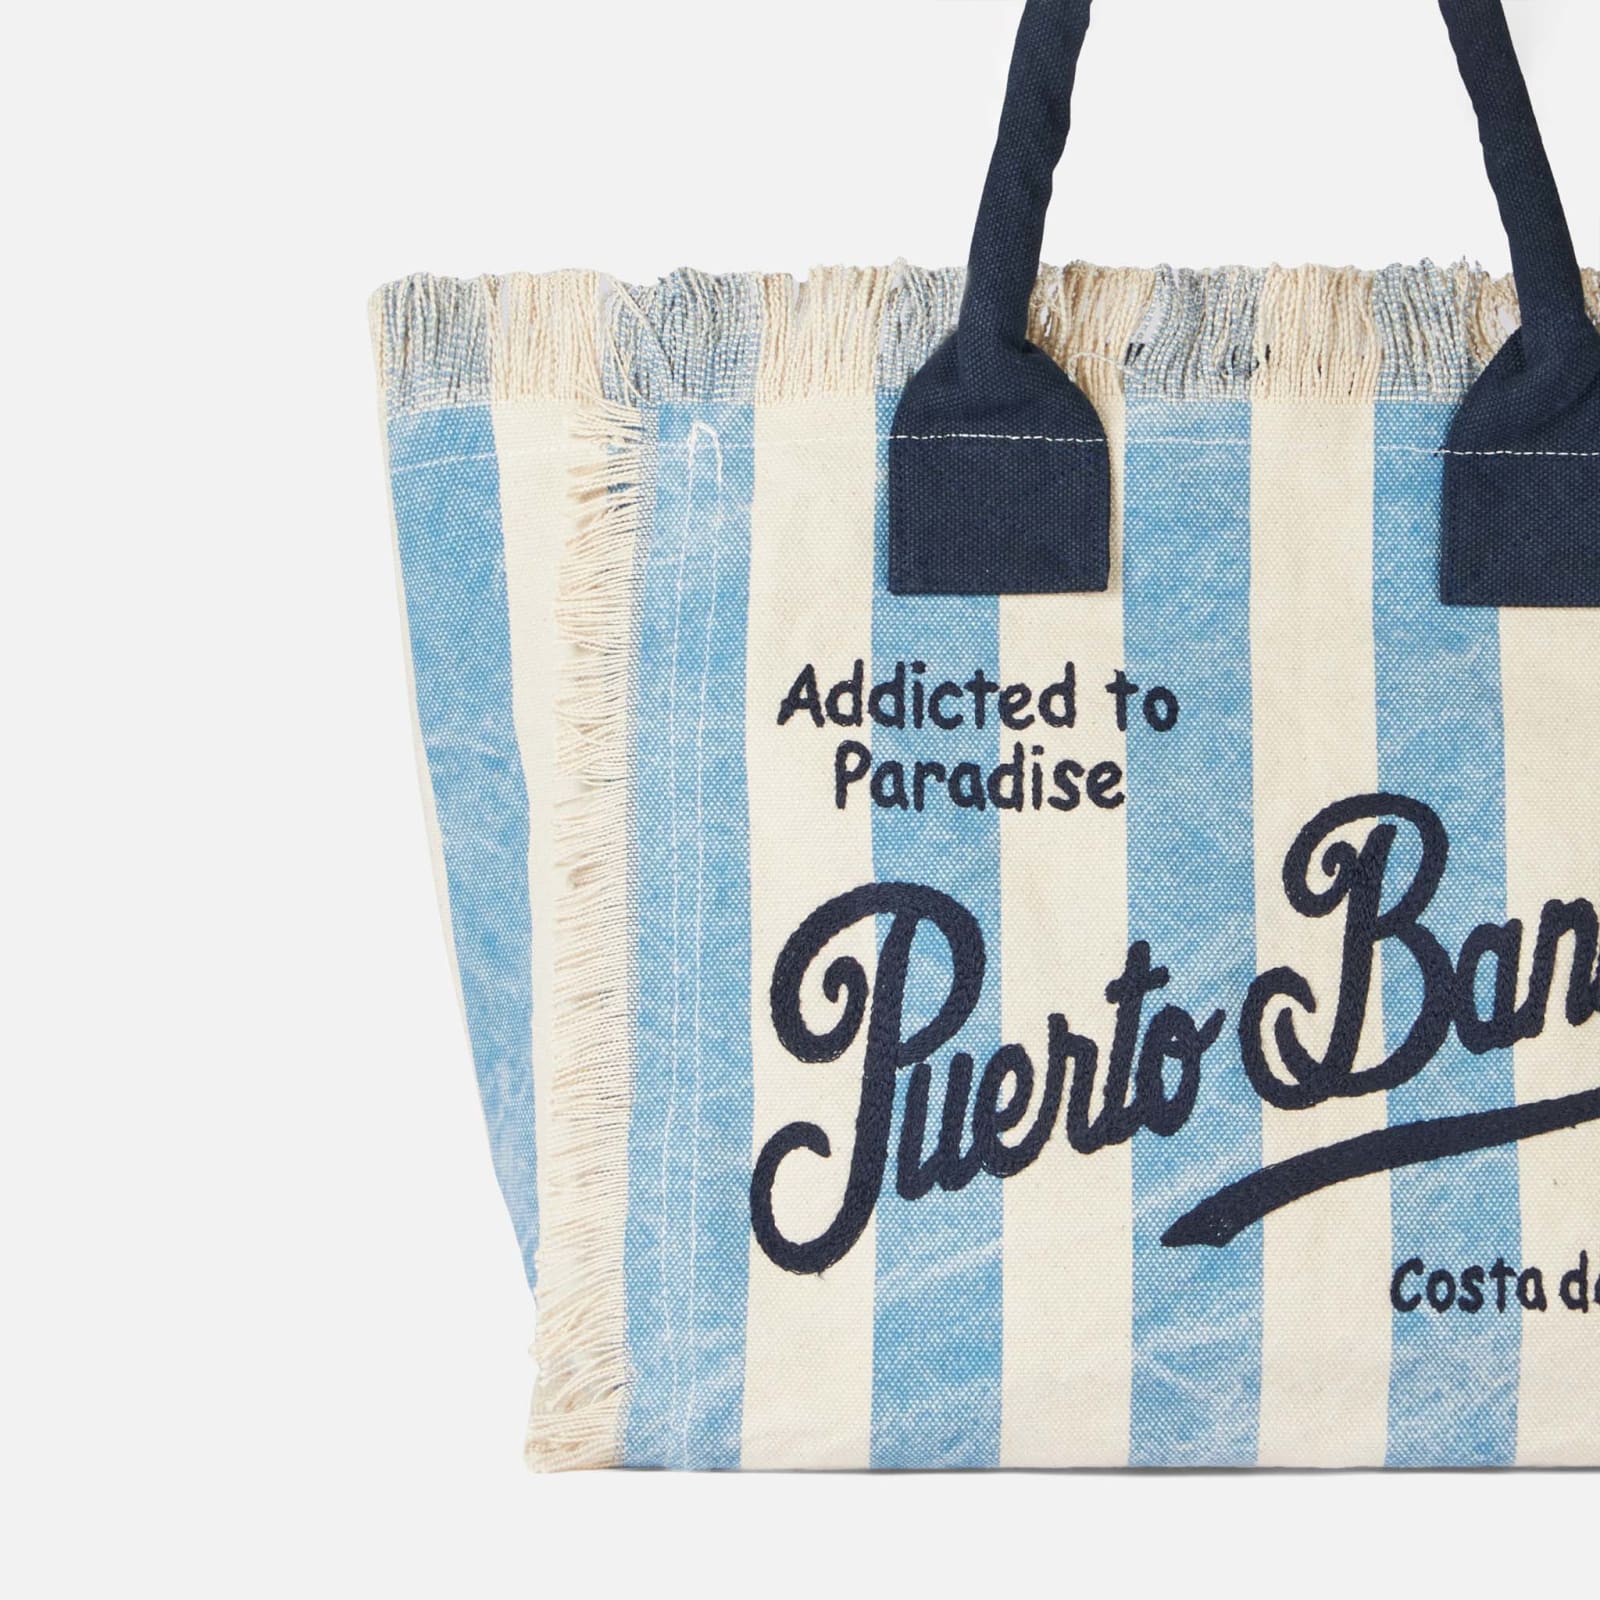 Shop Mc2 Saint Barth Vanity Canvas Shoulder Bag With Puerto Banus Print In Blue